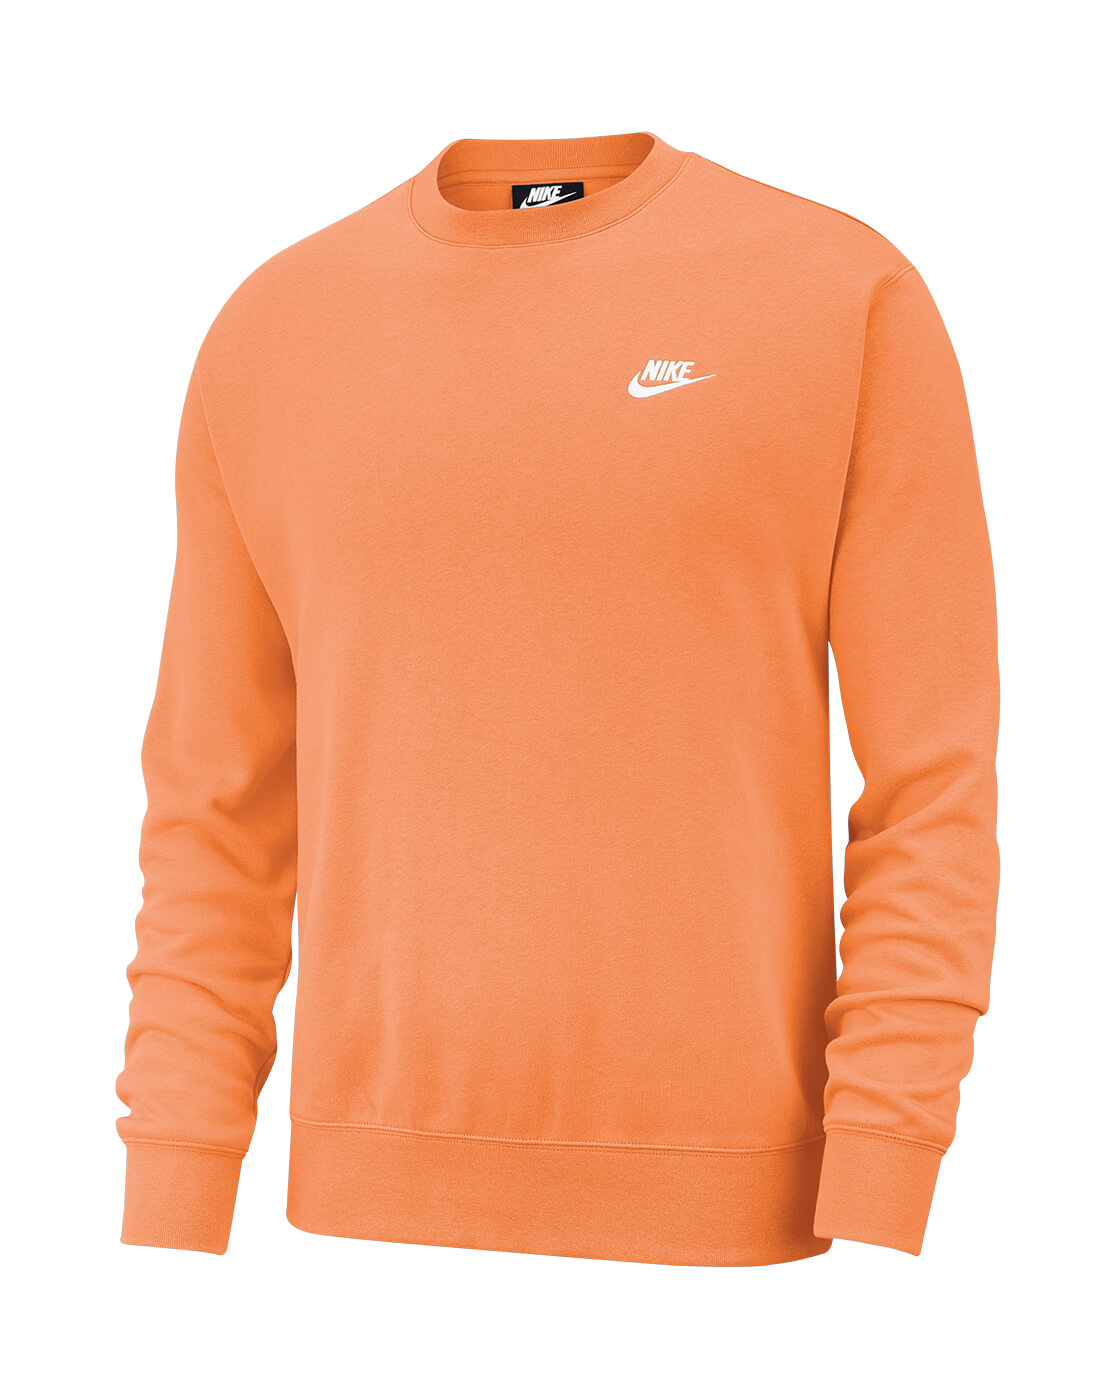 orange nike sweatshirt